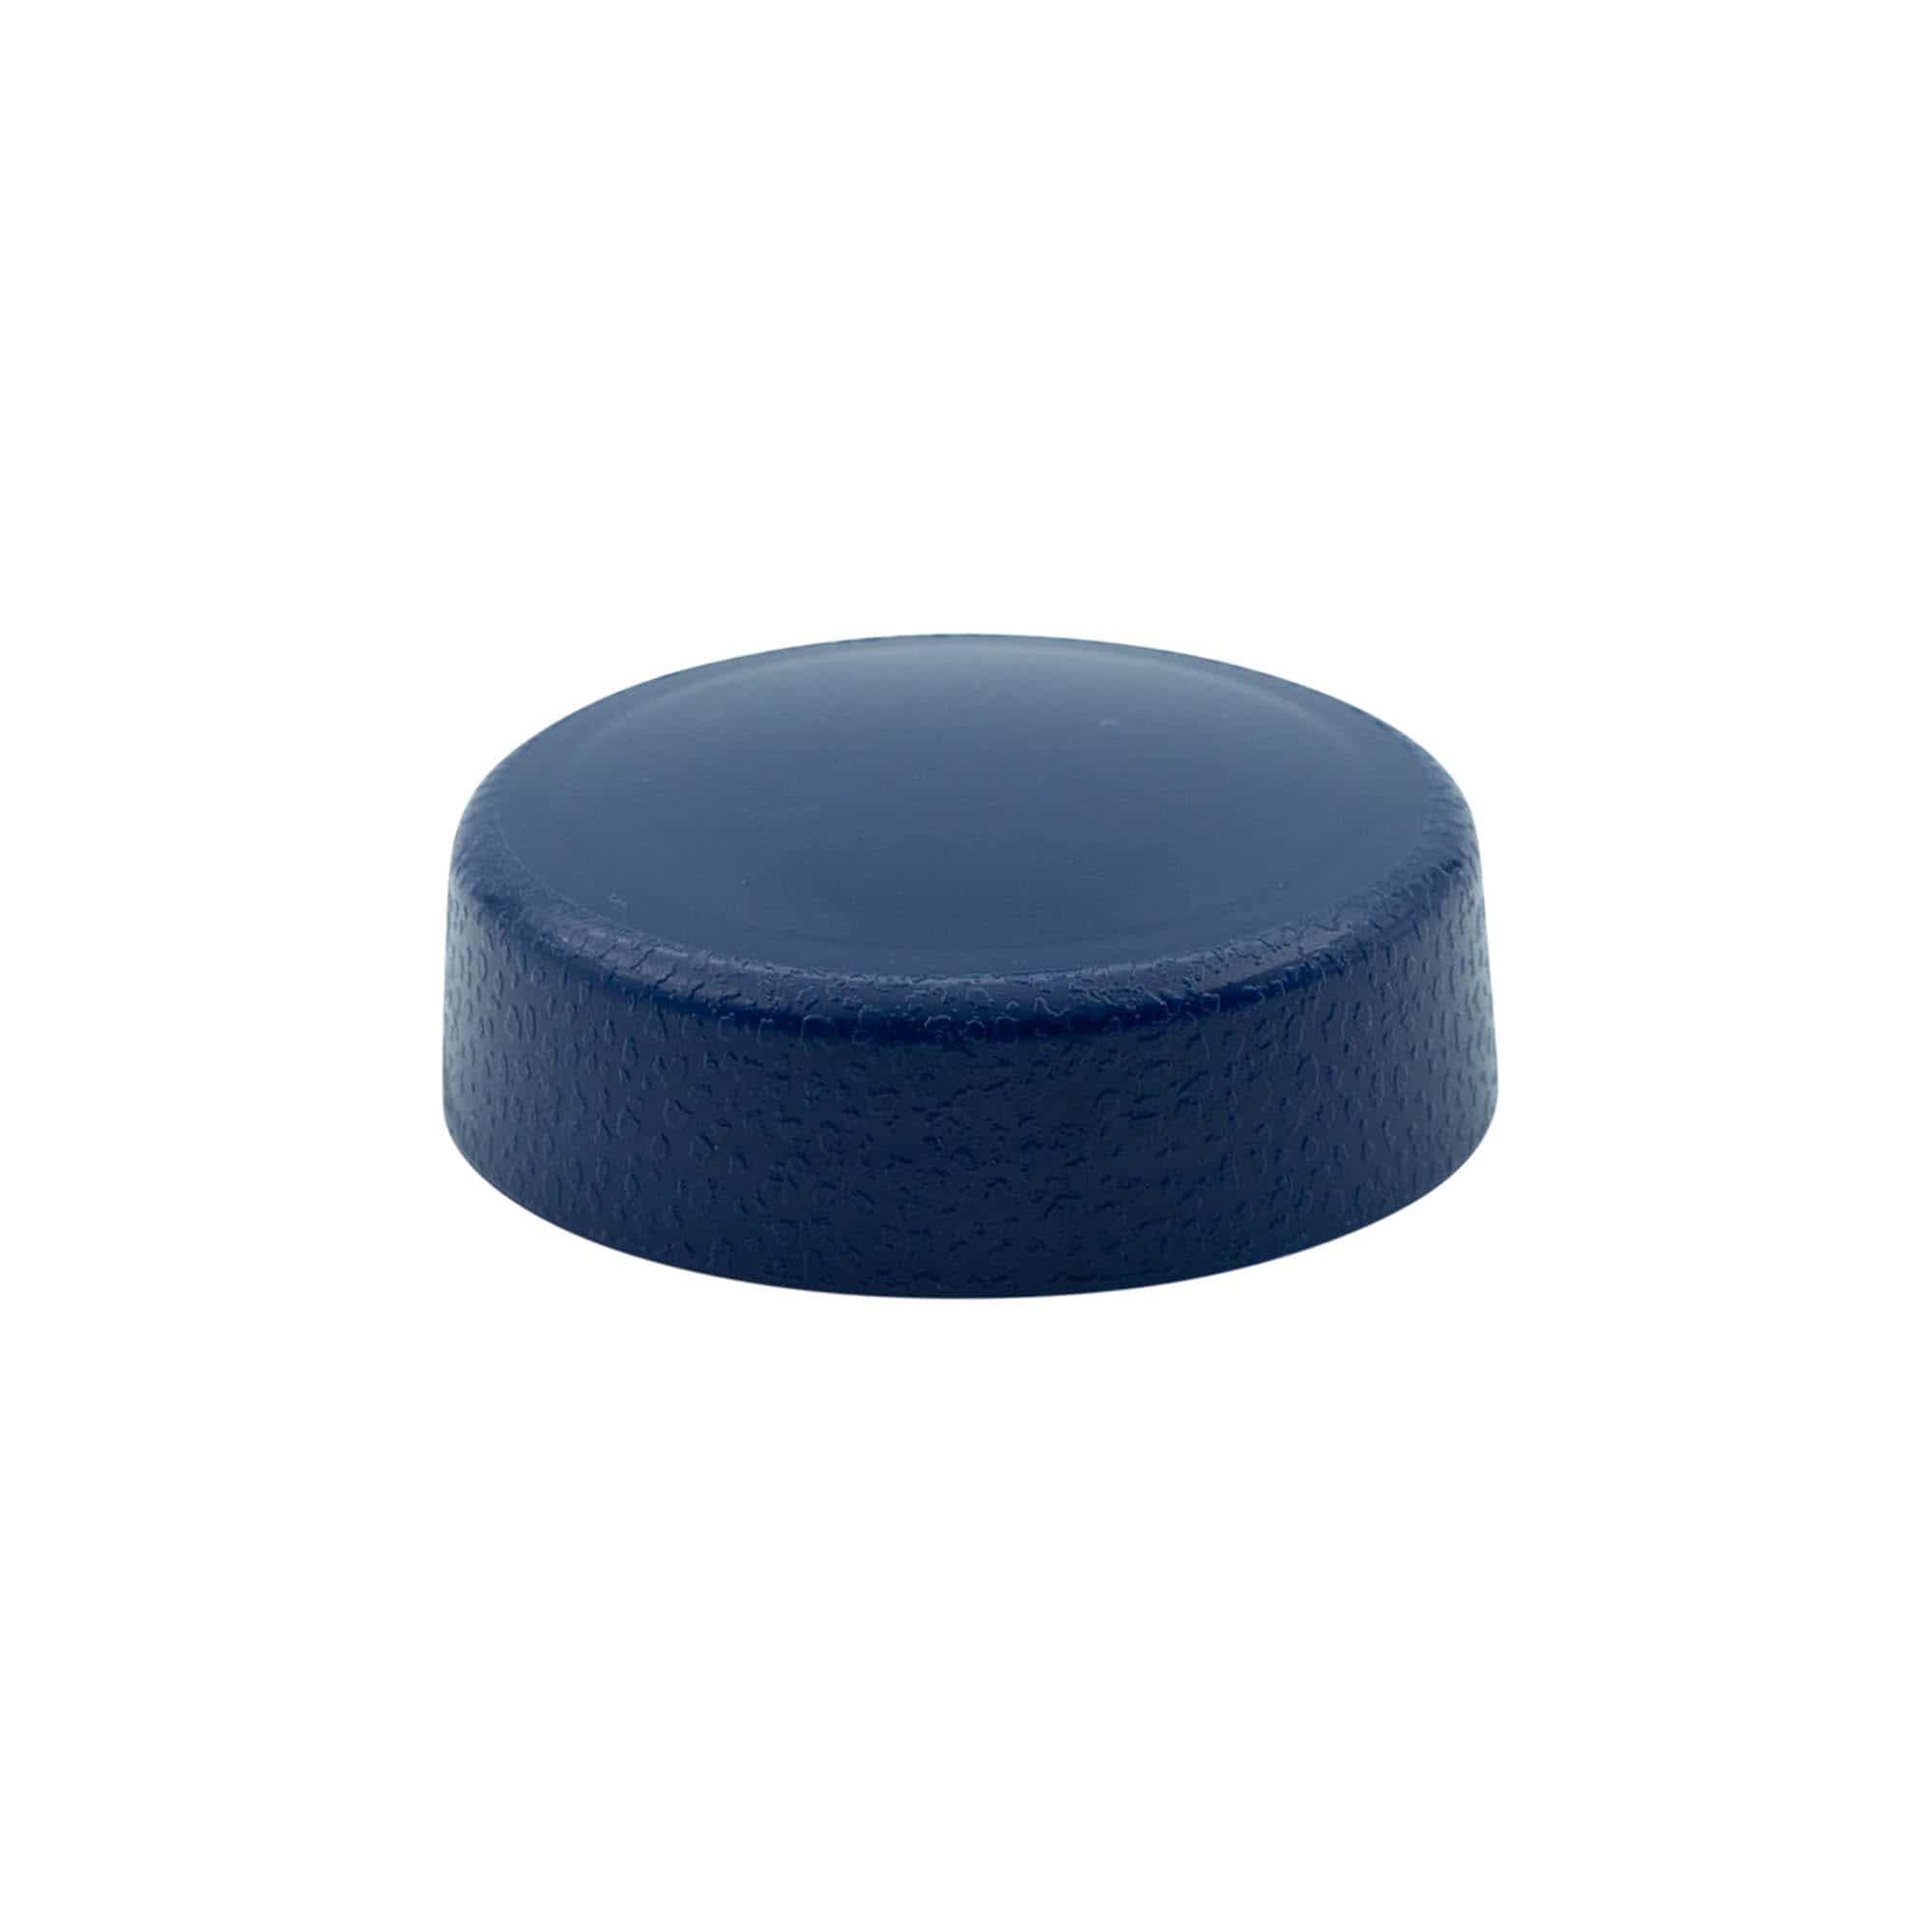 Screw cap for ‘Kavodrink’, PP plastic, dark blue